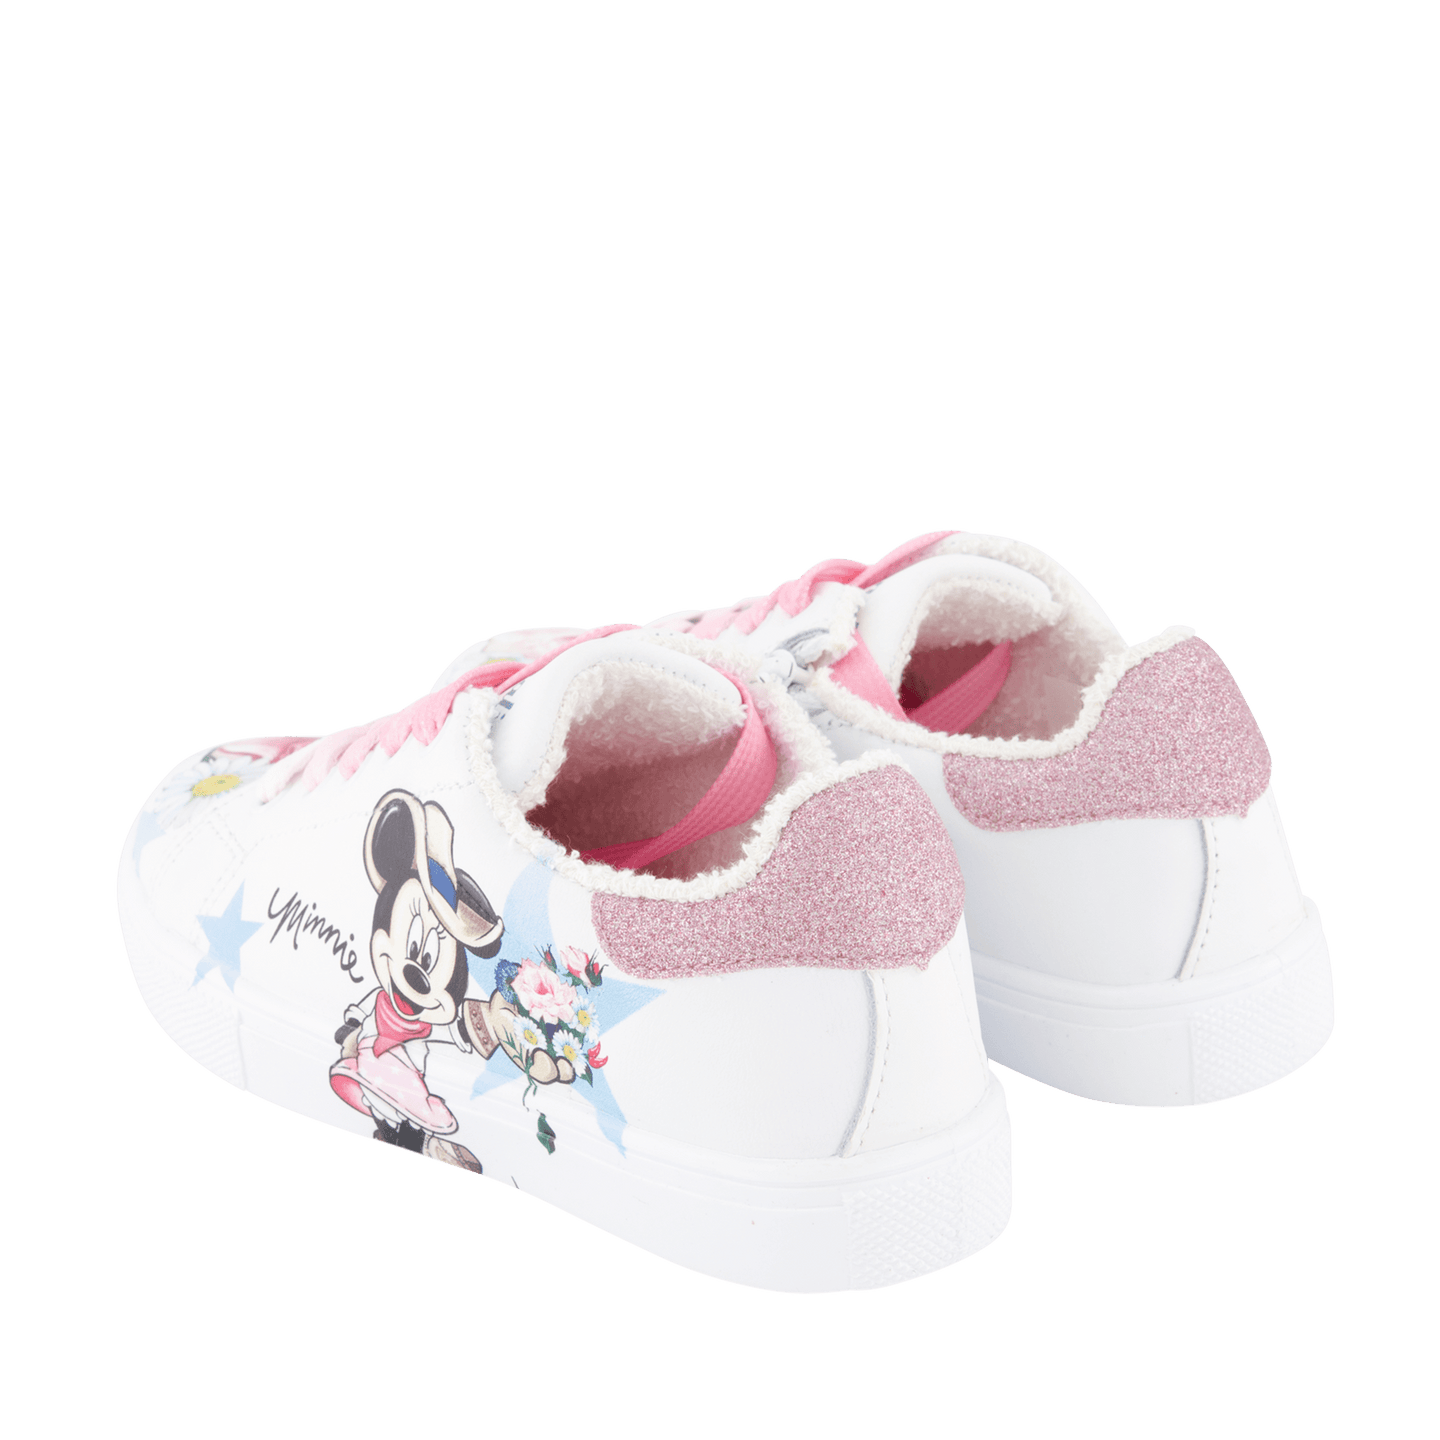 MonnaLisa Kinder Meisjes Sneakers Wit 25